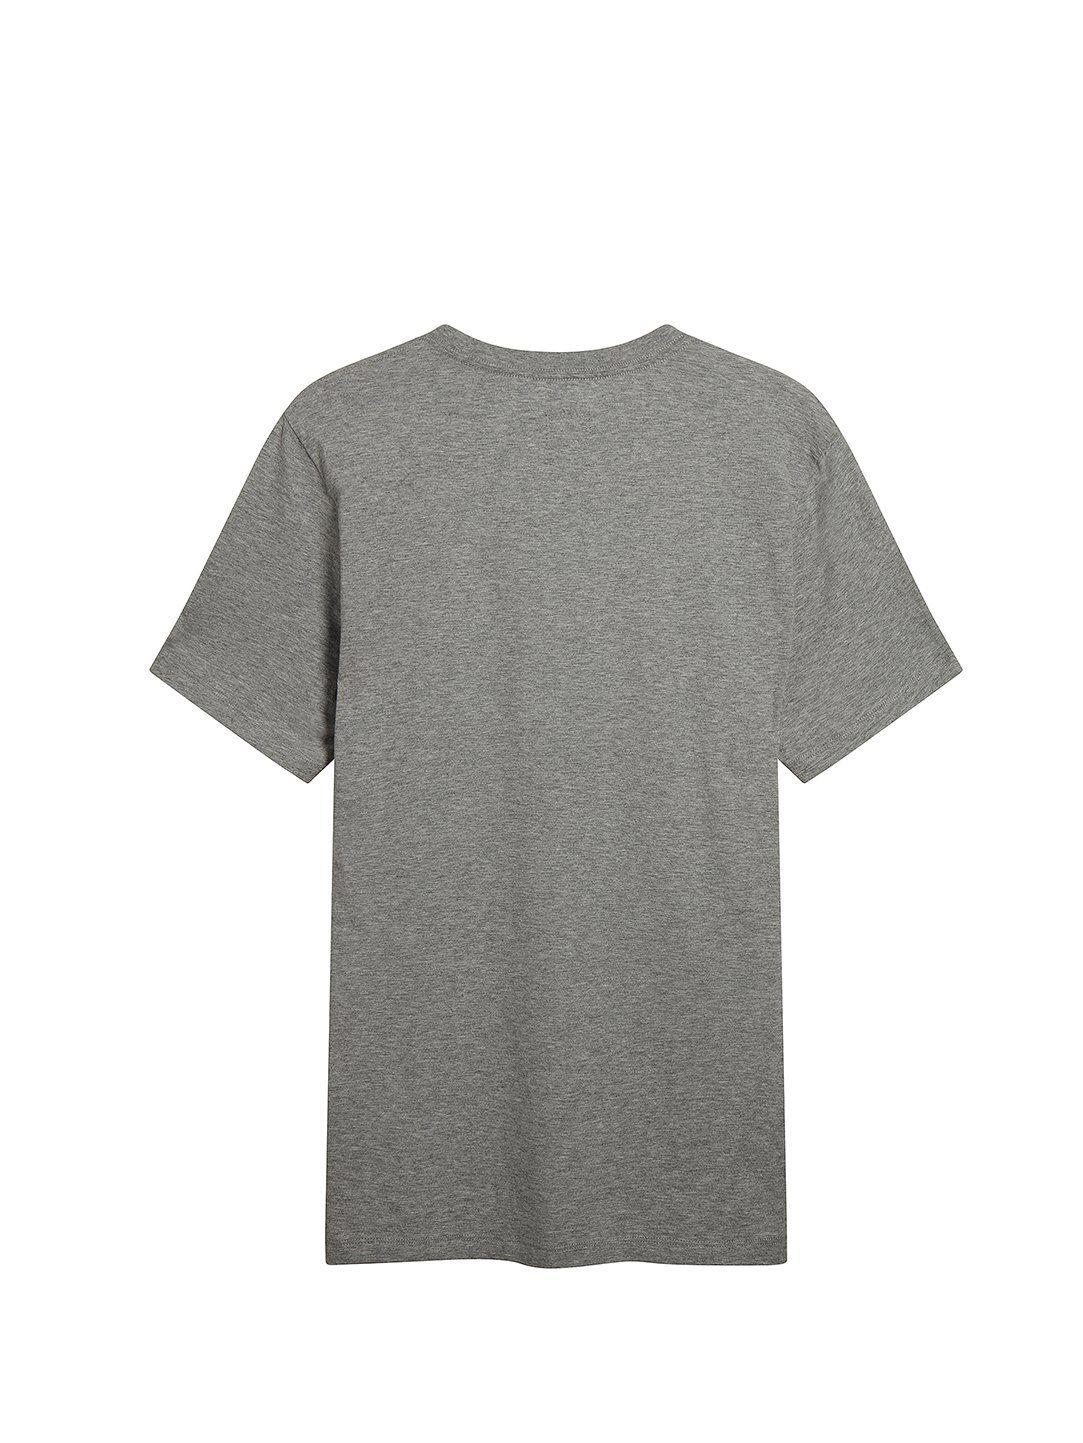 Grey Company Logo - C.P. Company | Jersey 30/1 Mini Vintage Logo Print Crew T-Shirt in Grey